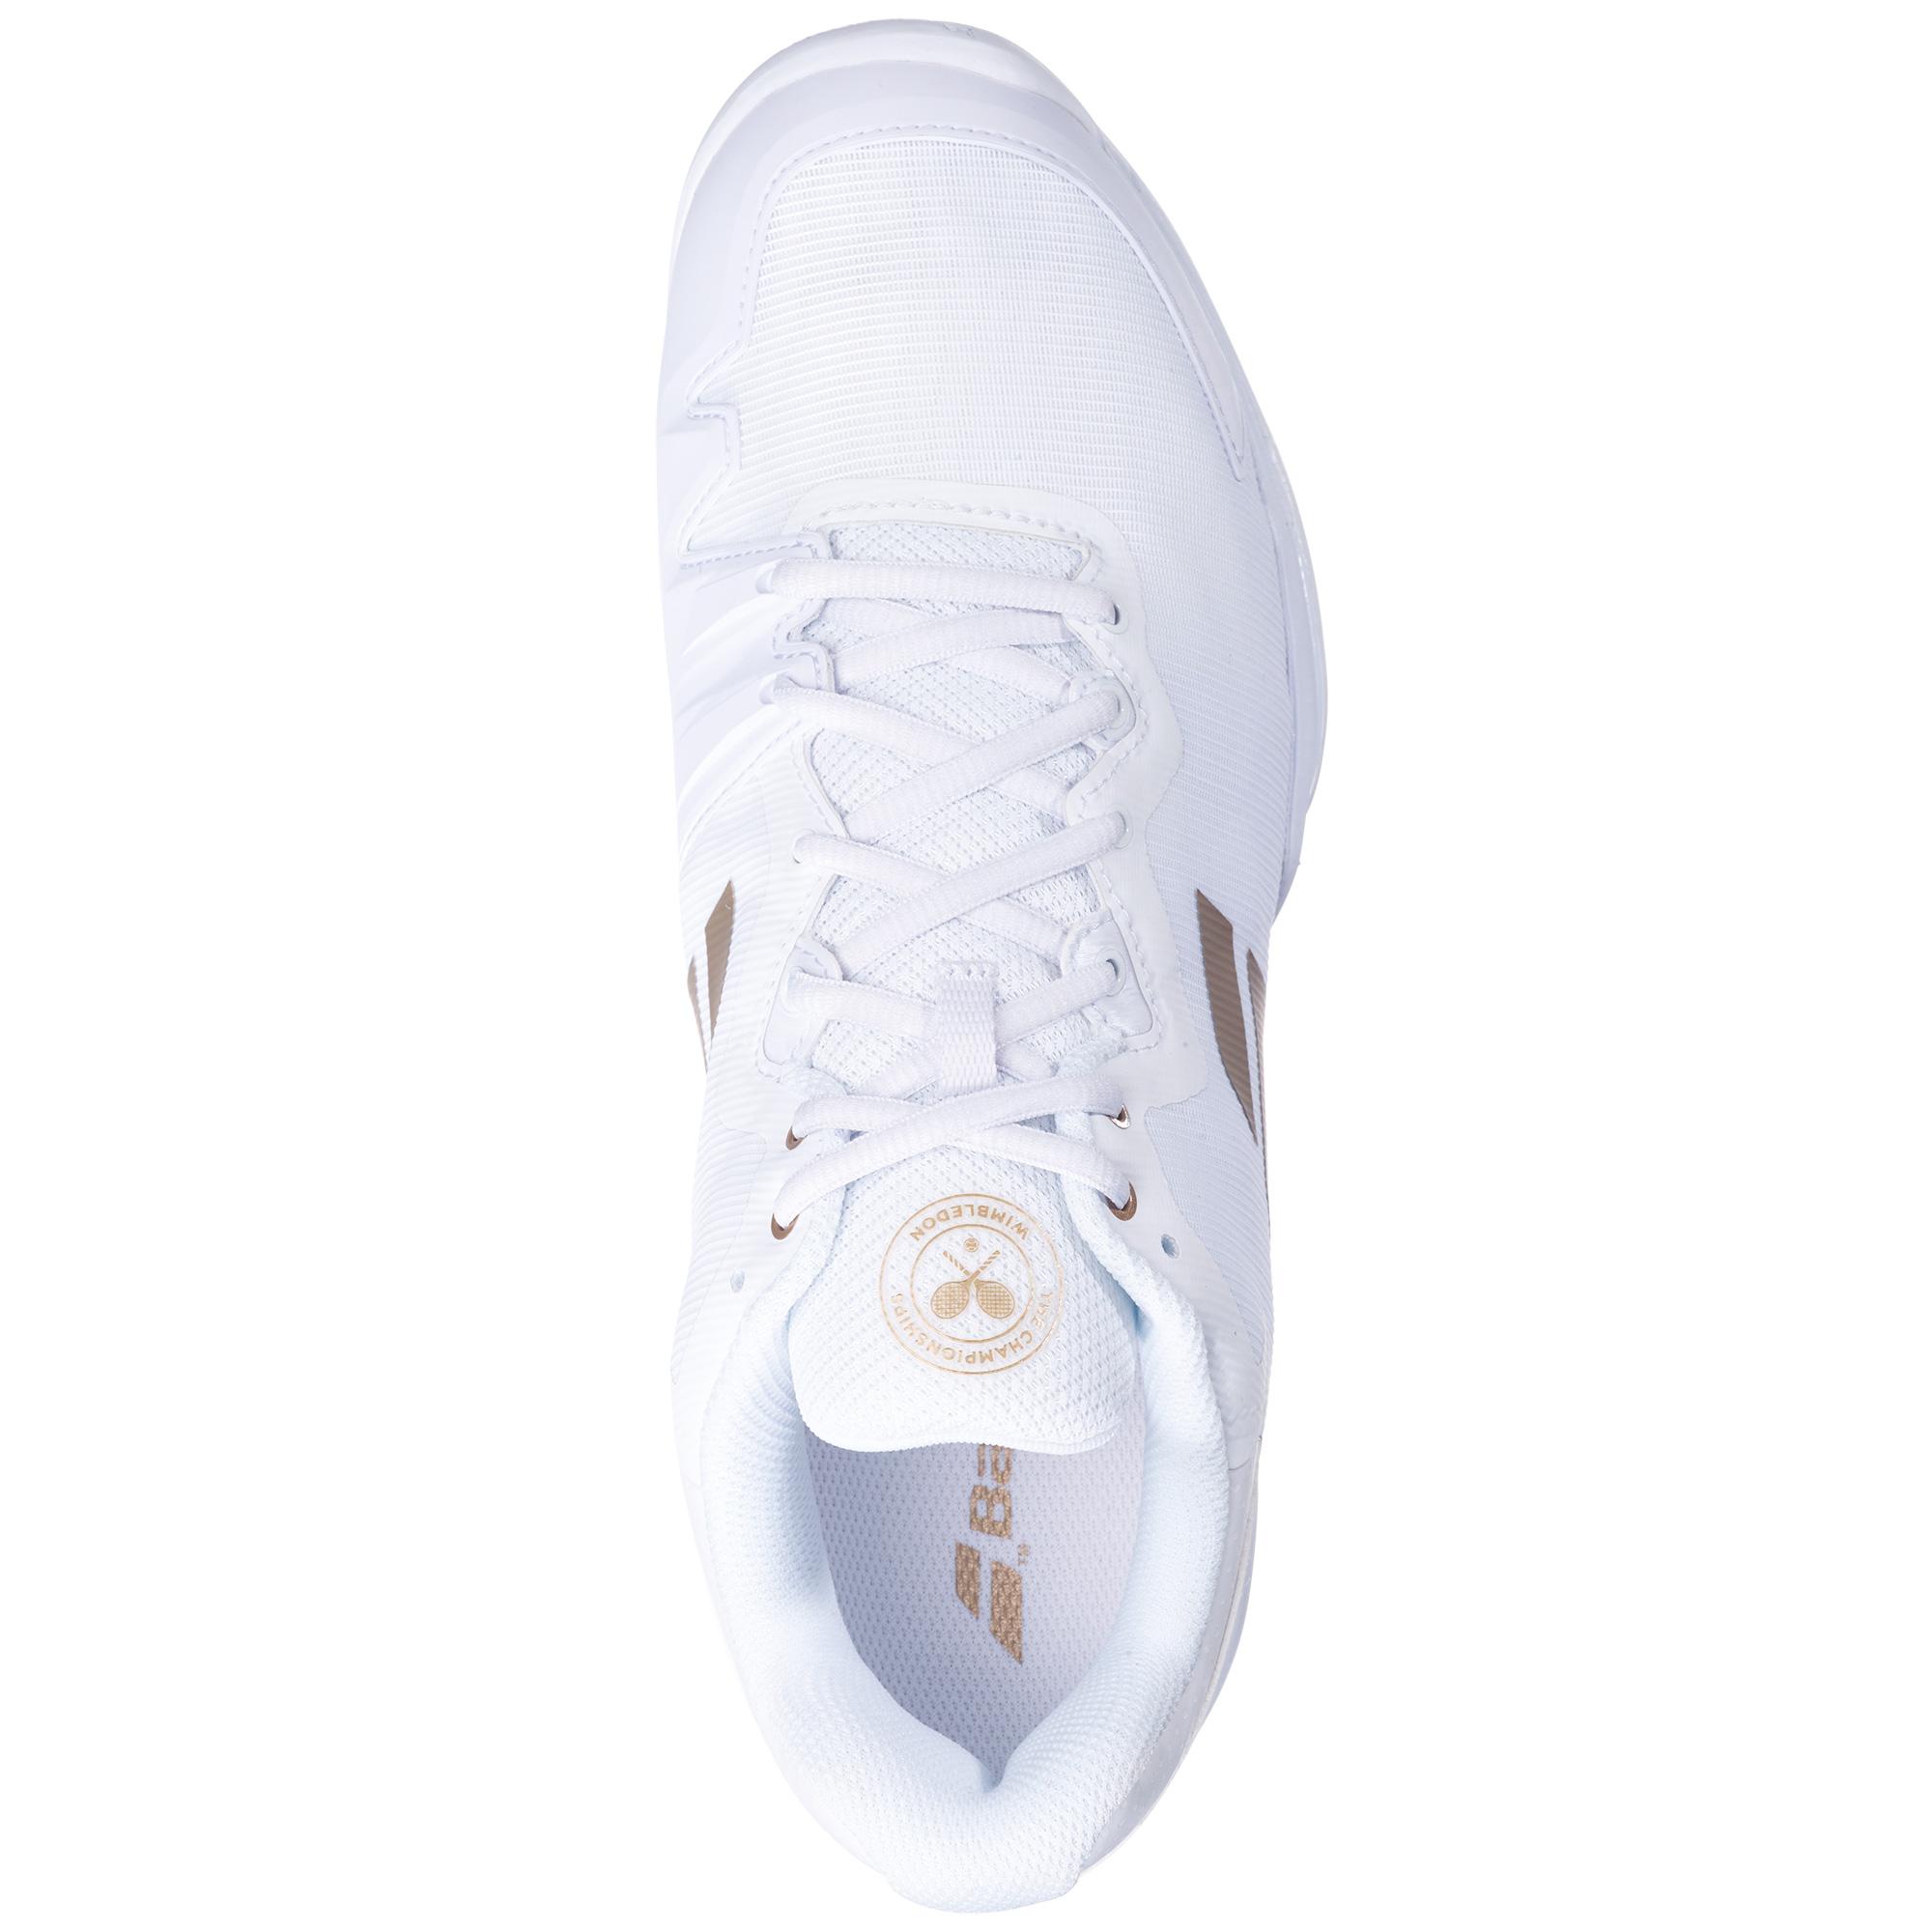 Babolat Mens SFX3 Wimbledon Tennis Shoes - White/Gold - Tennisnuts.com